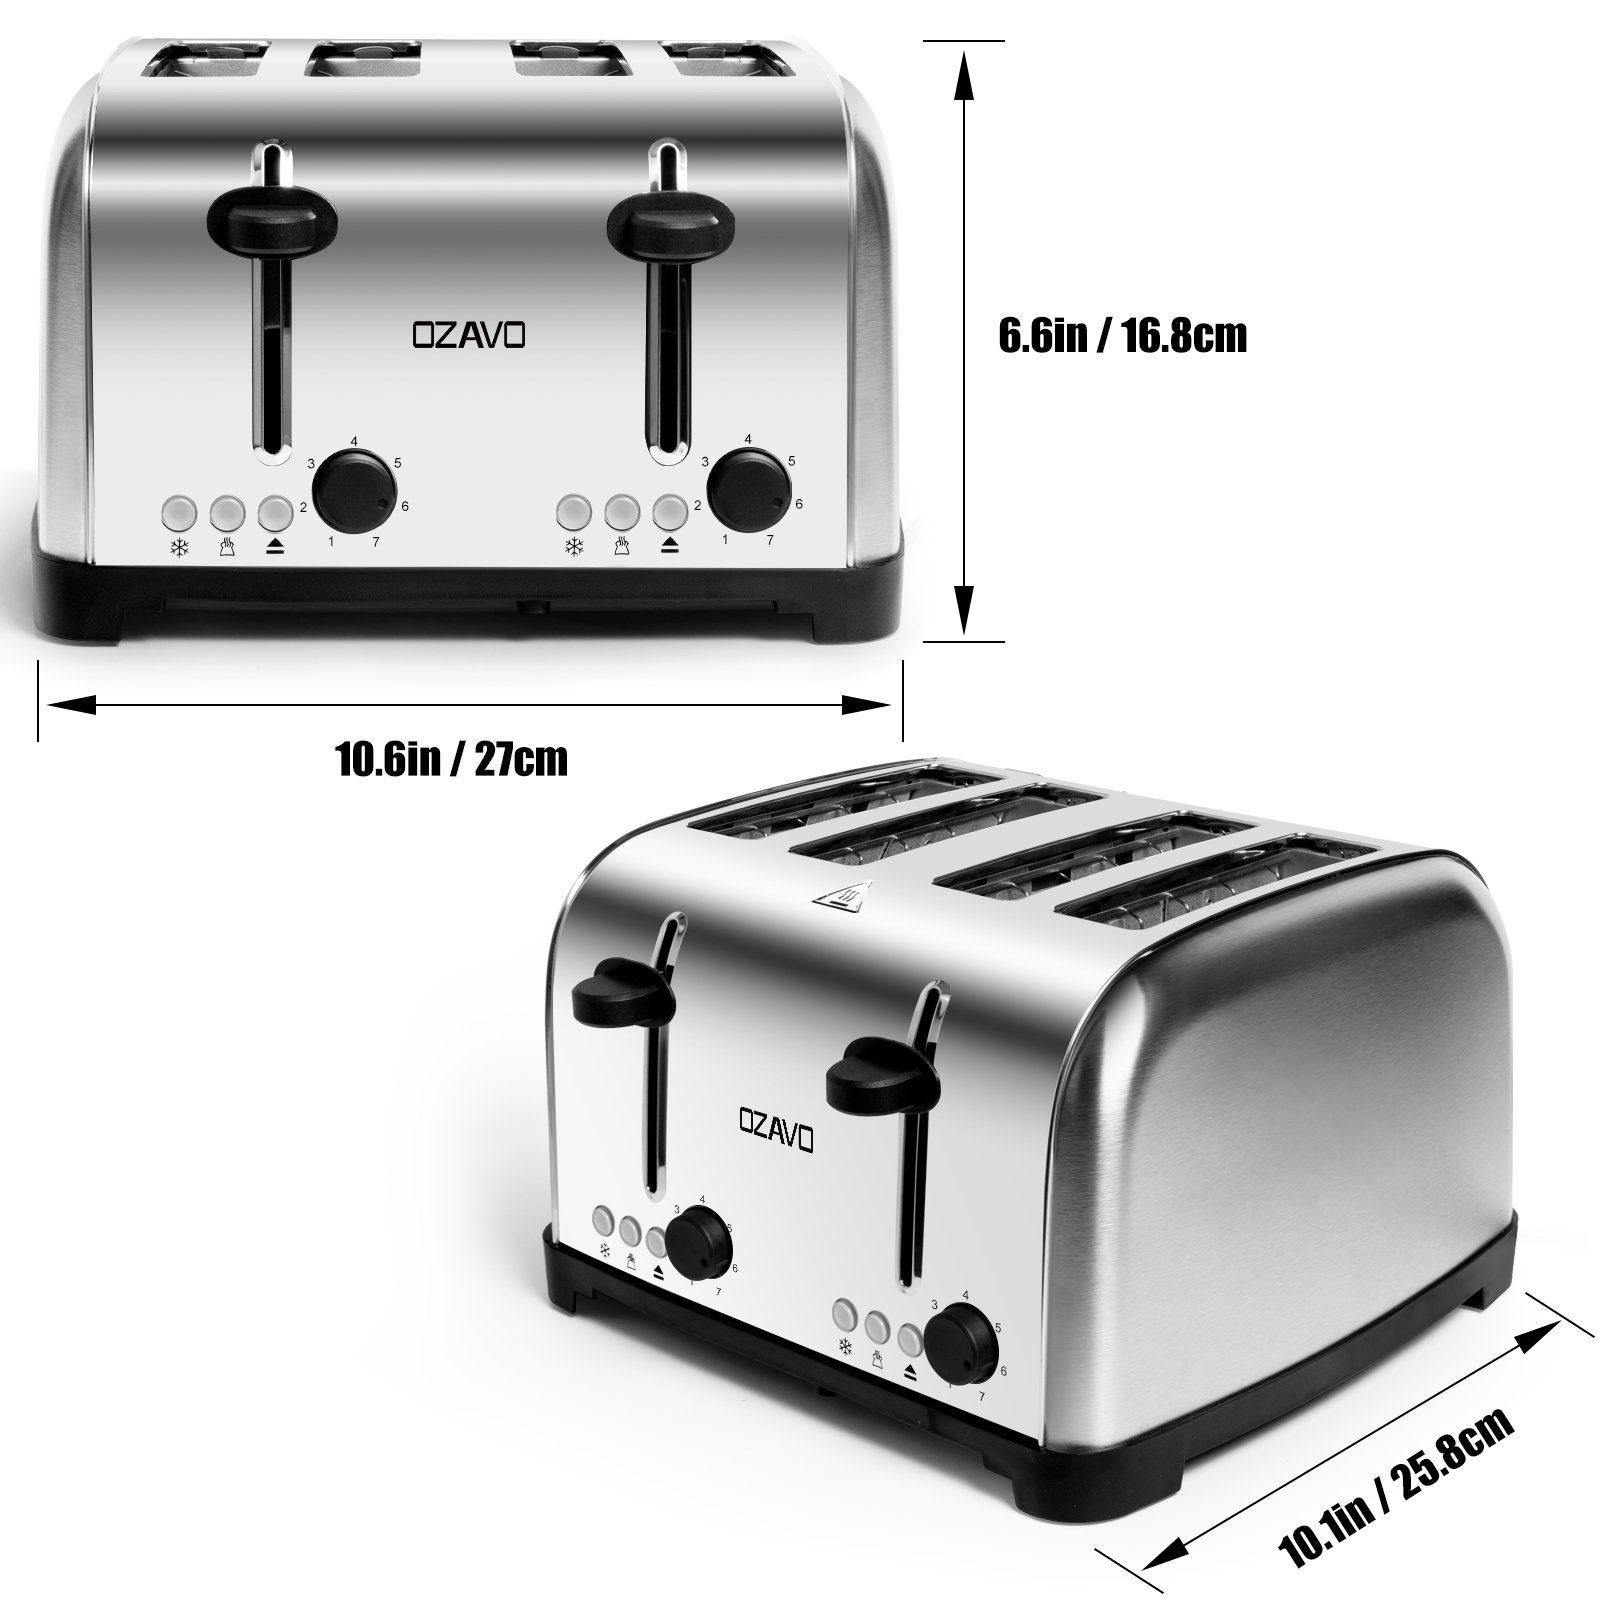 Toaster 4) OZAVO (1700 Silber Schlitze: Watt, OZ331